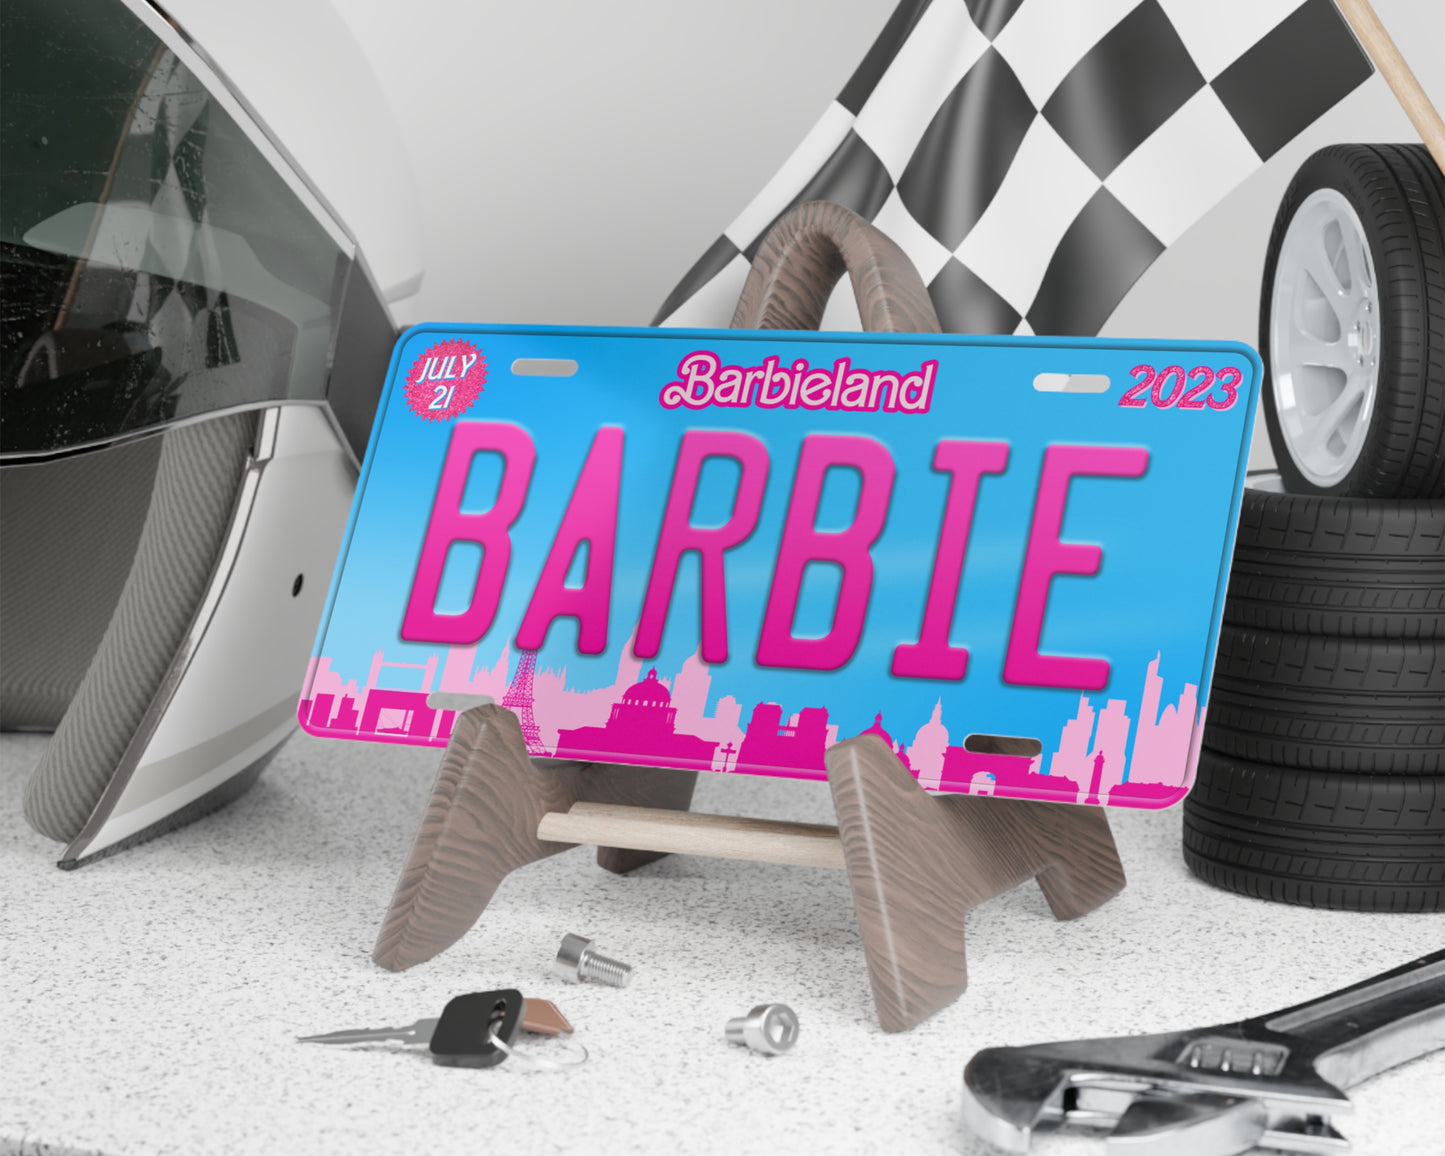 Barbie (2023) movie license plate